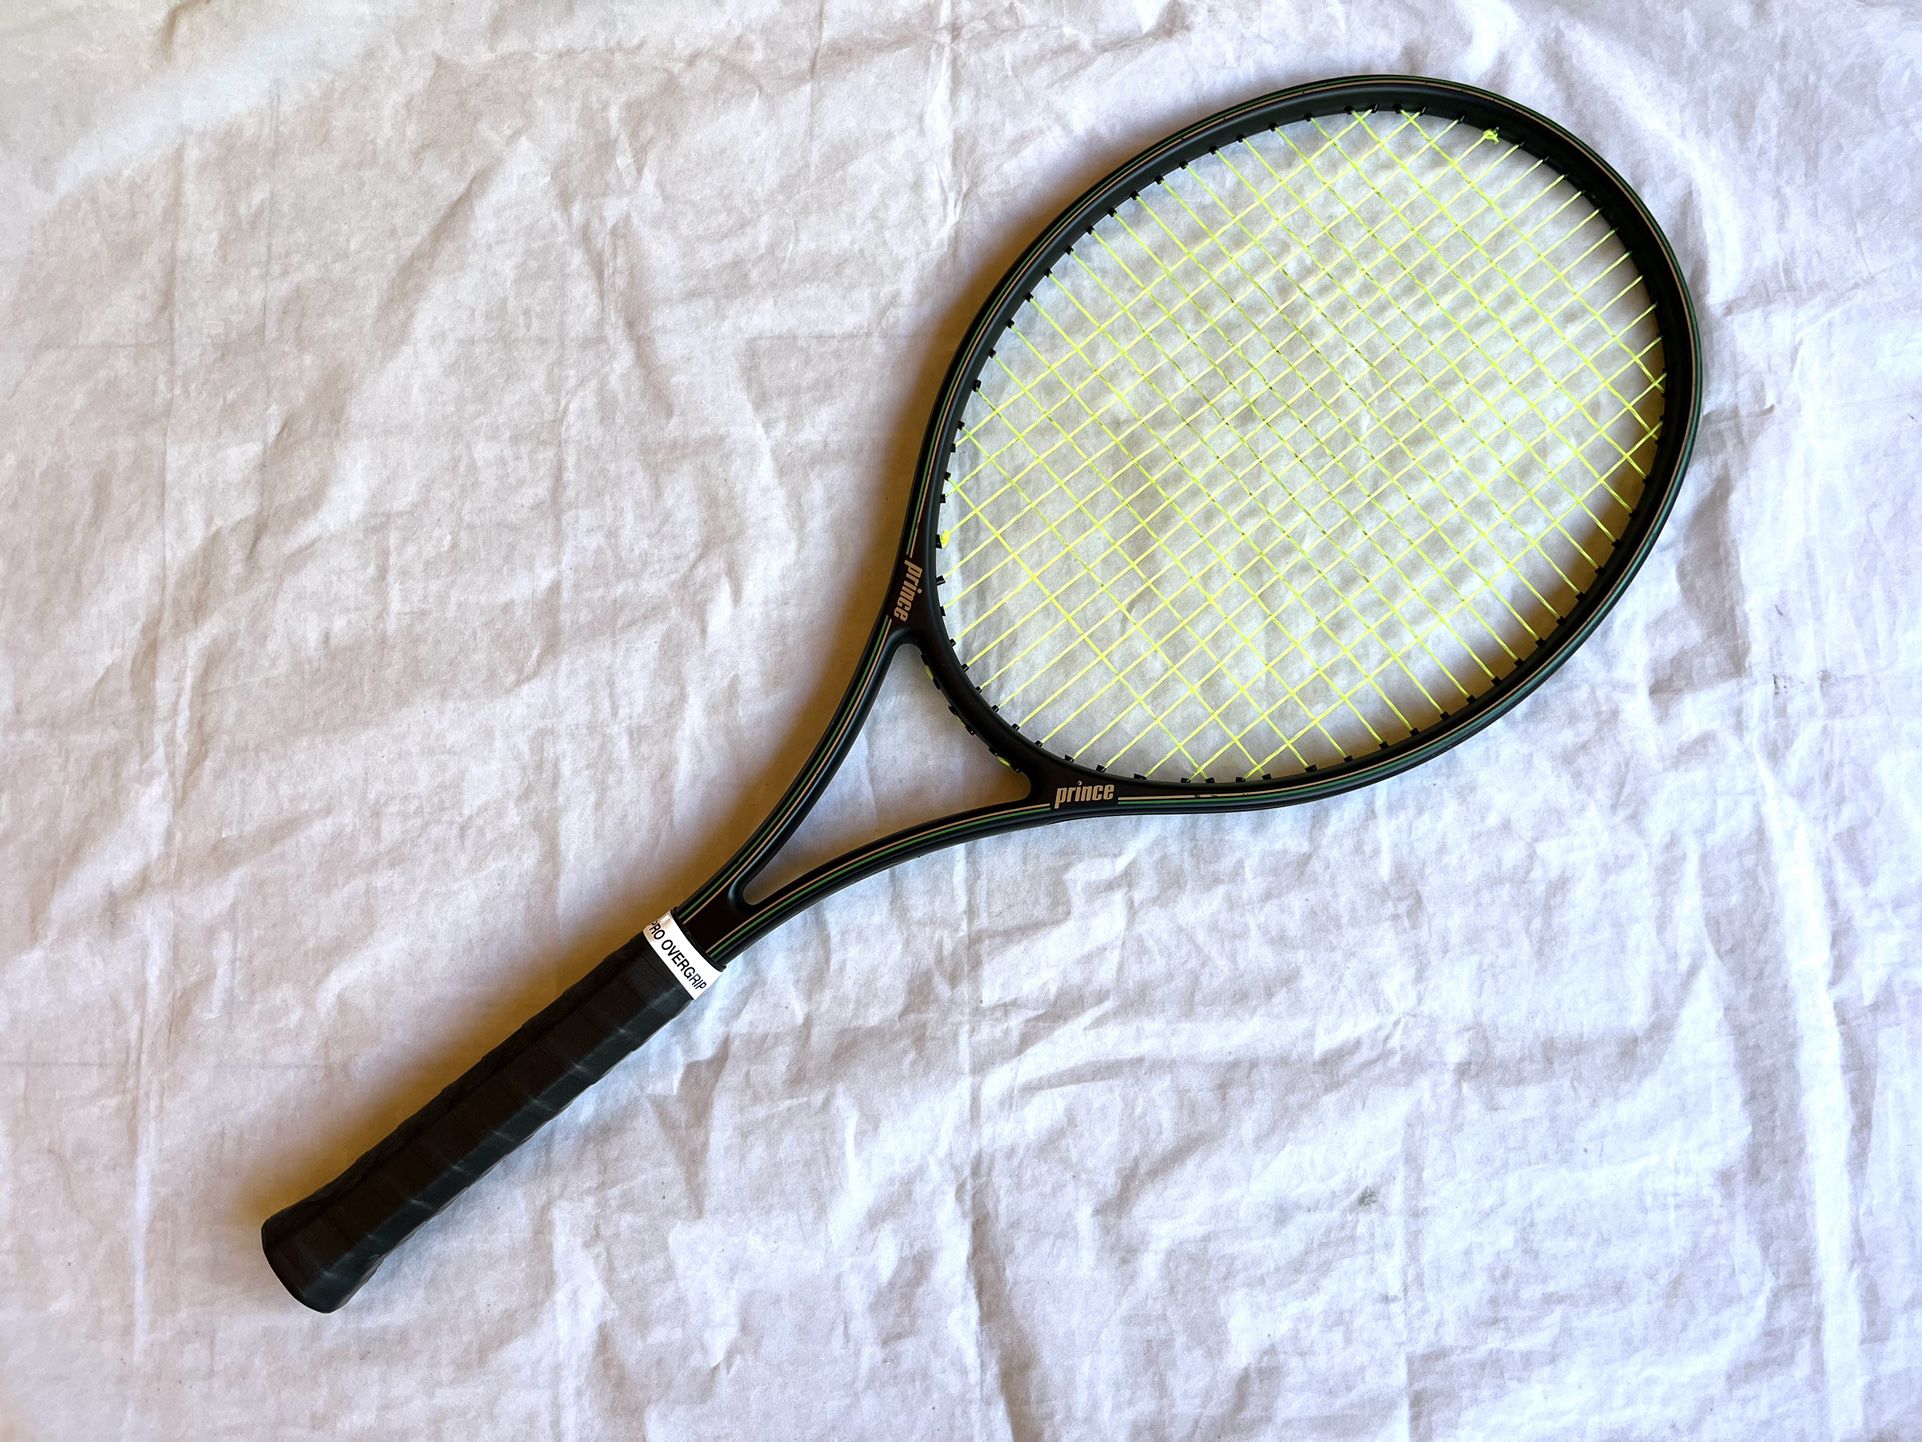 Prince Graphite Comp Oversize Tennis Racquet / Racket - PRICE FIRM